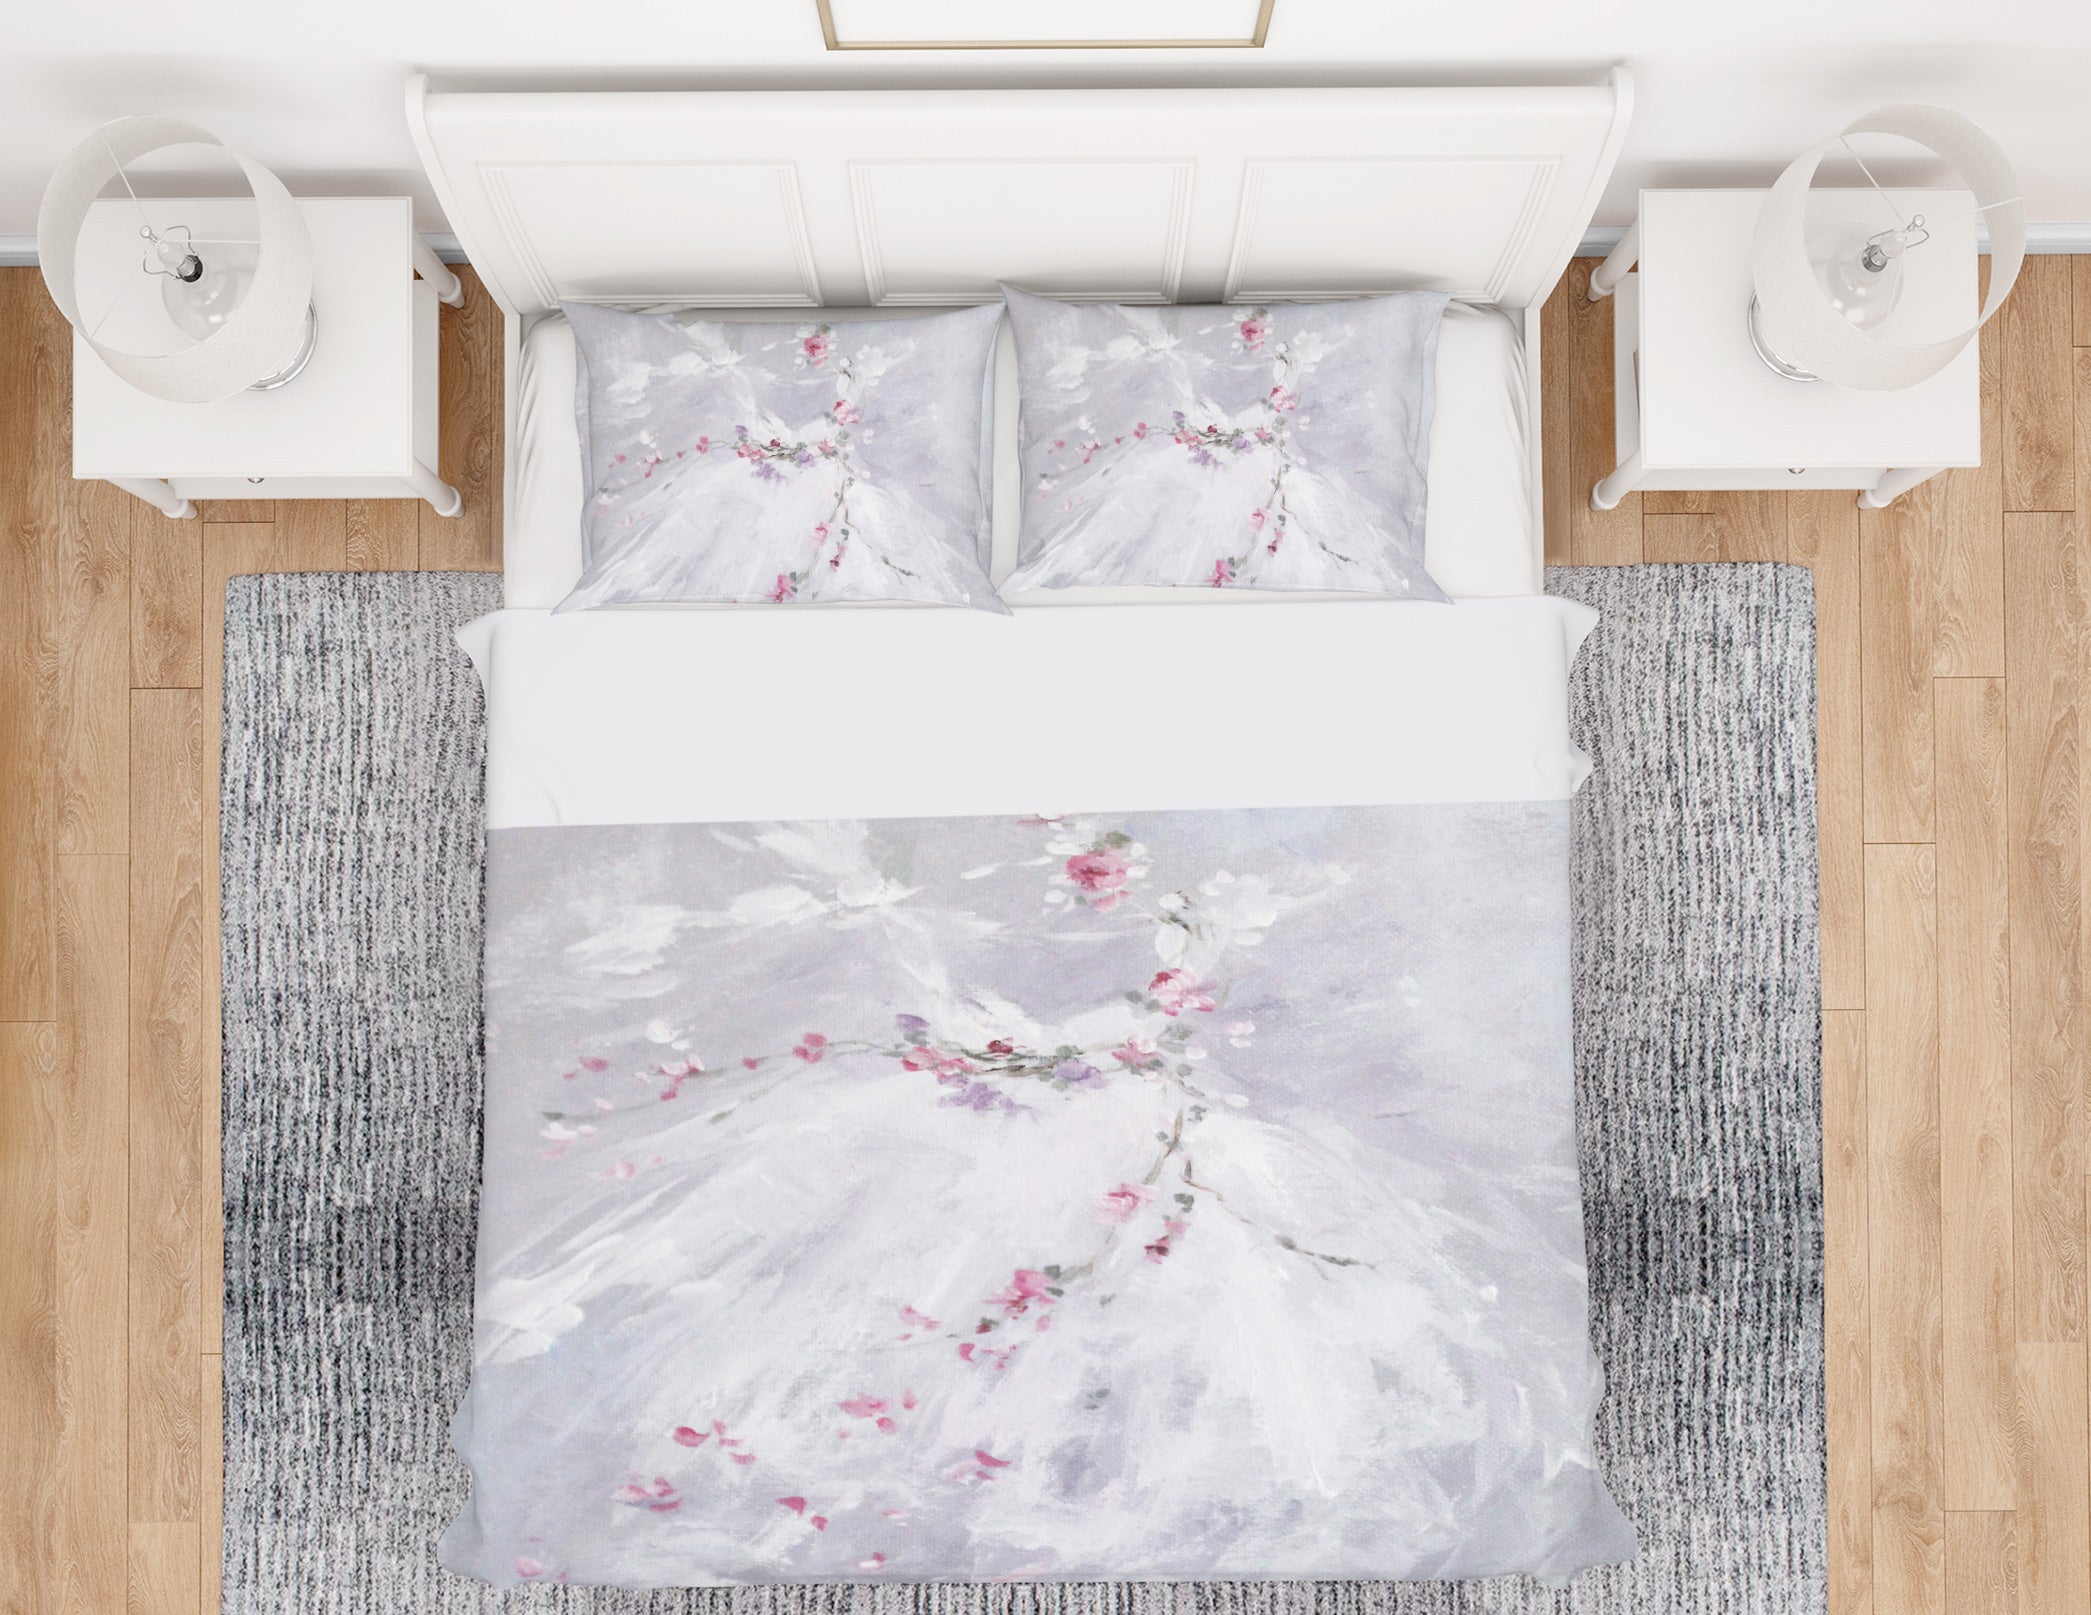 3D White Skirt Flowers 2151 Debi Coules Bedding Bed Pillowcases Quilt